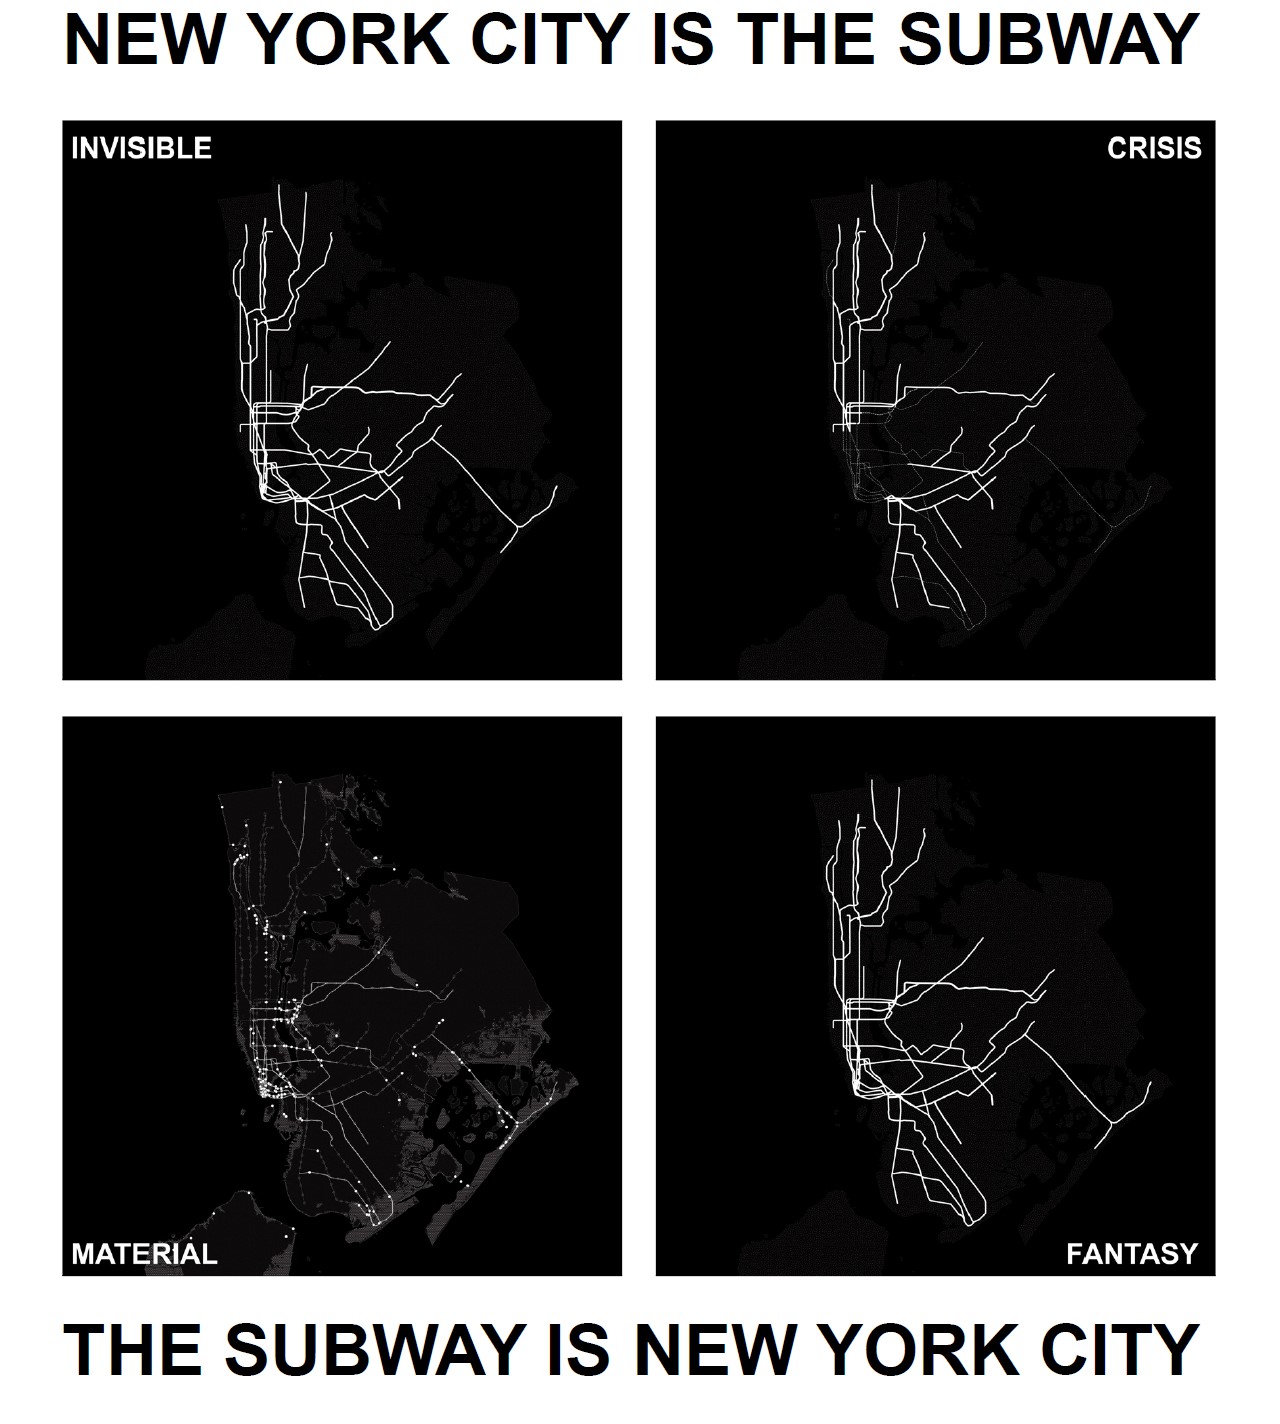 The New York City Subway: Invisibility, Crisis, Material, Fantasy